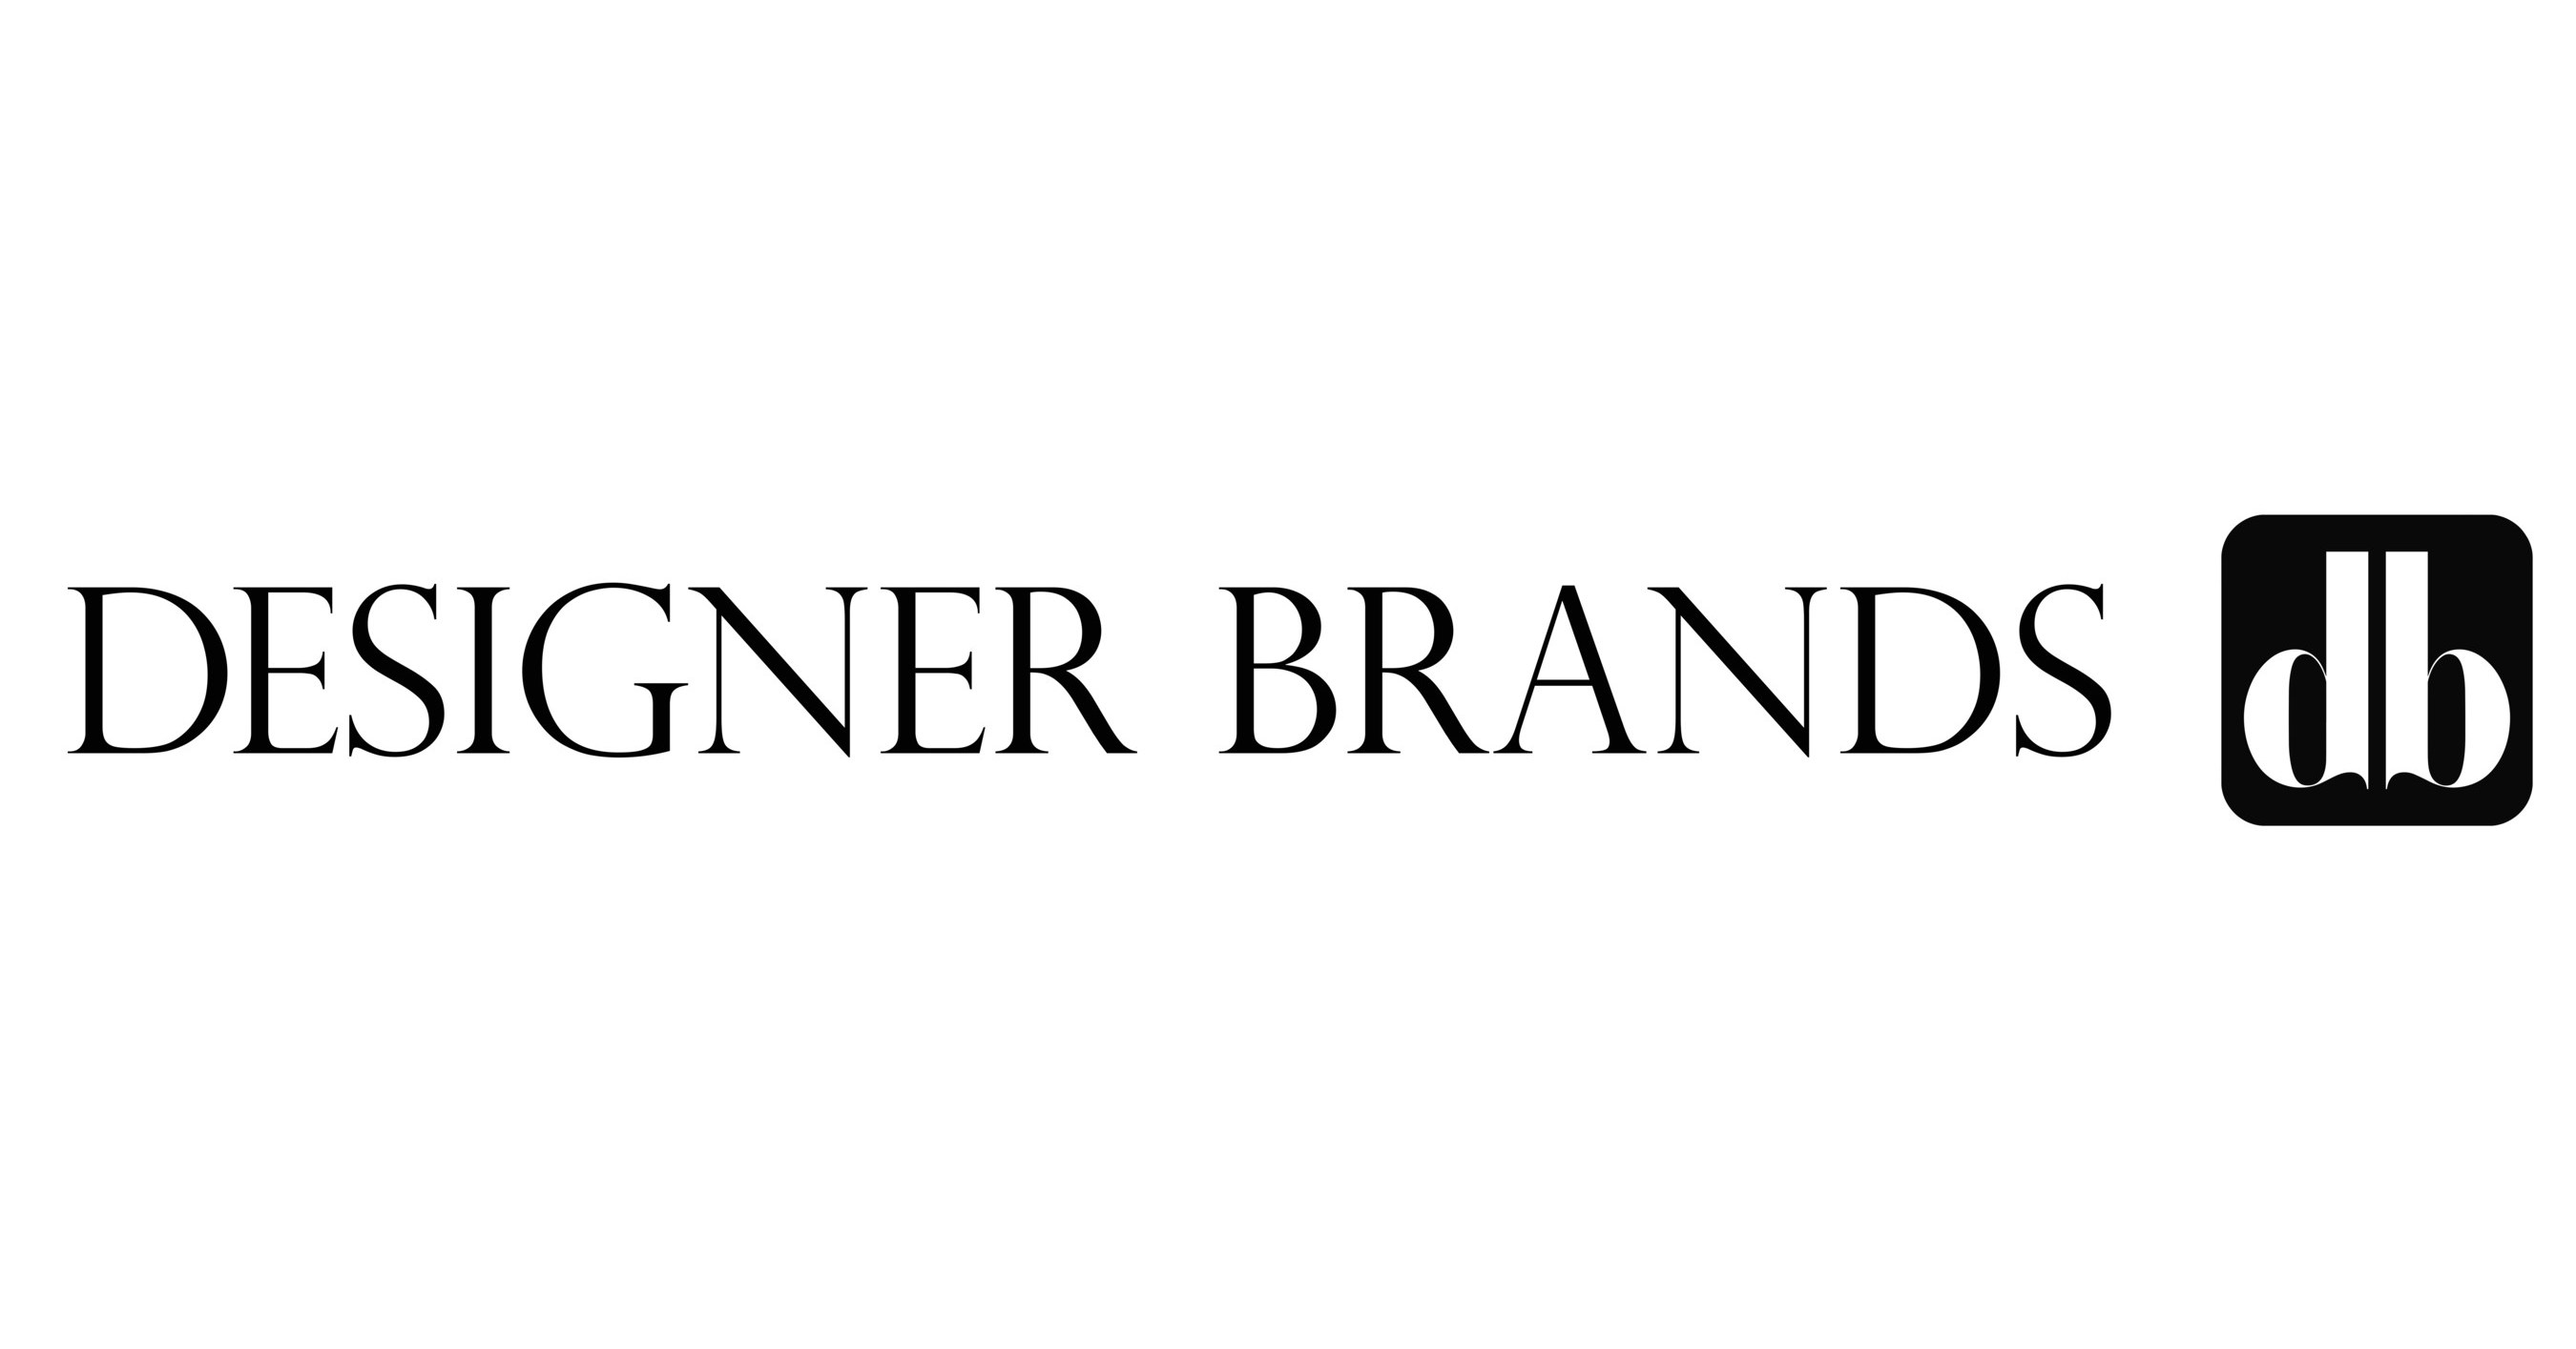 Camuto Group - Designer Brands